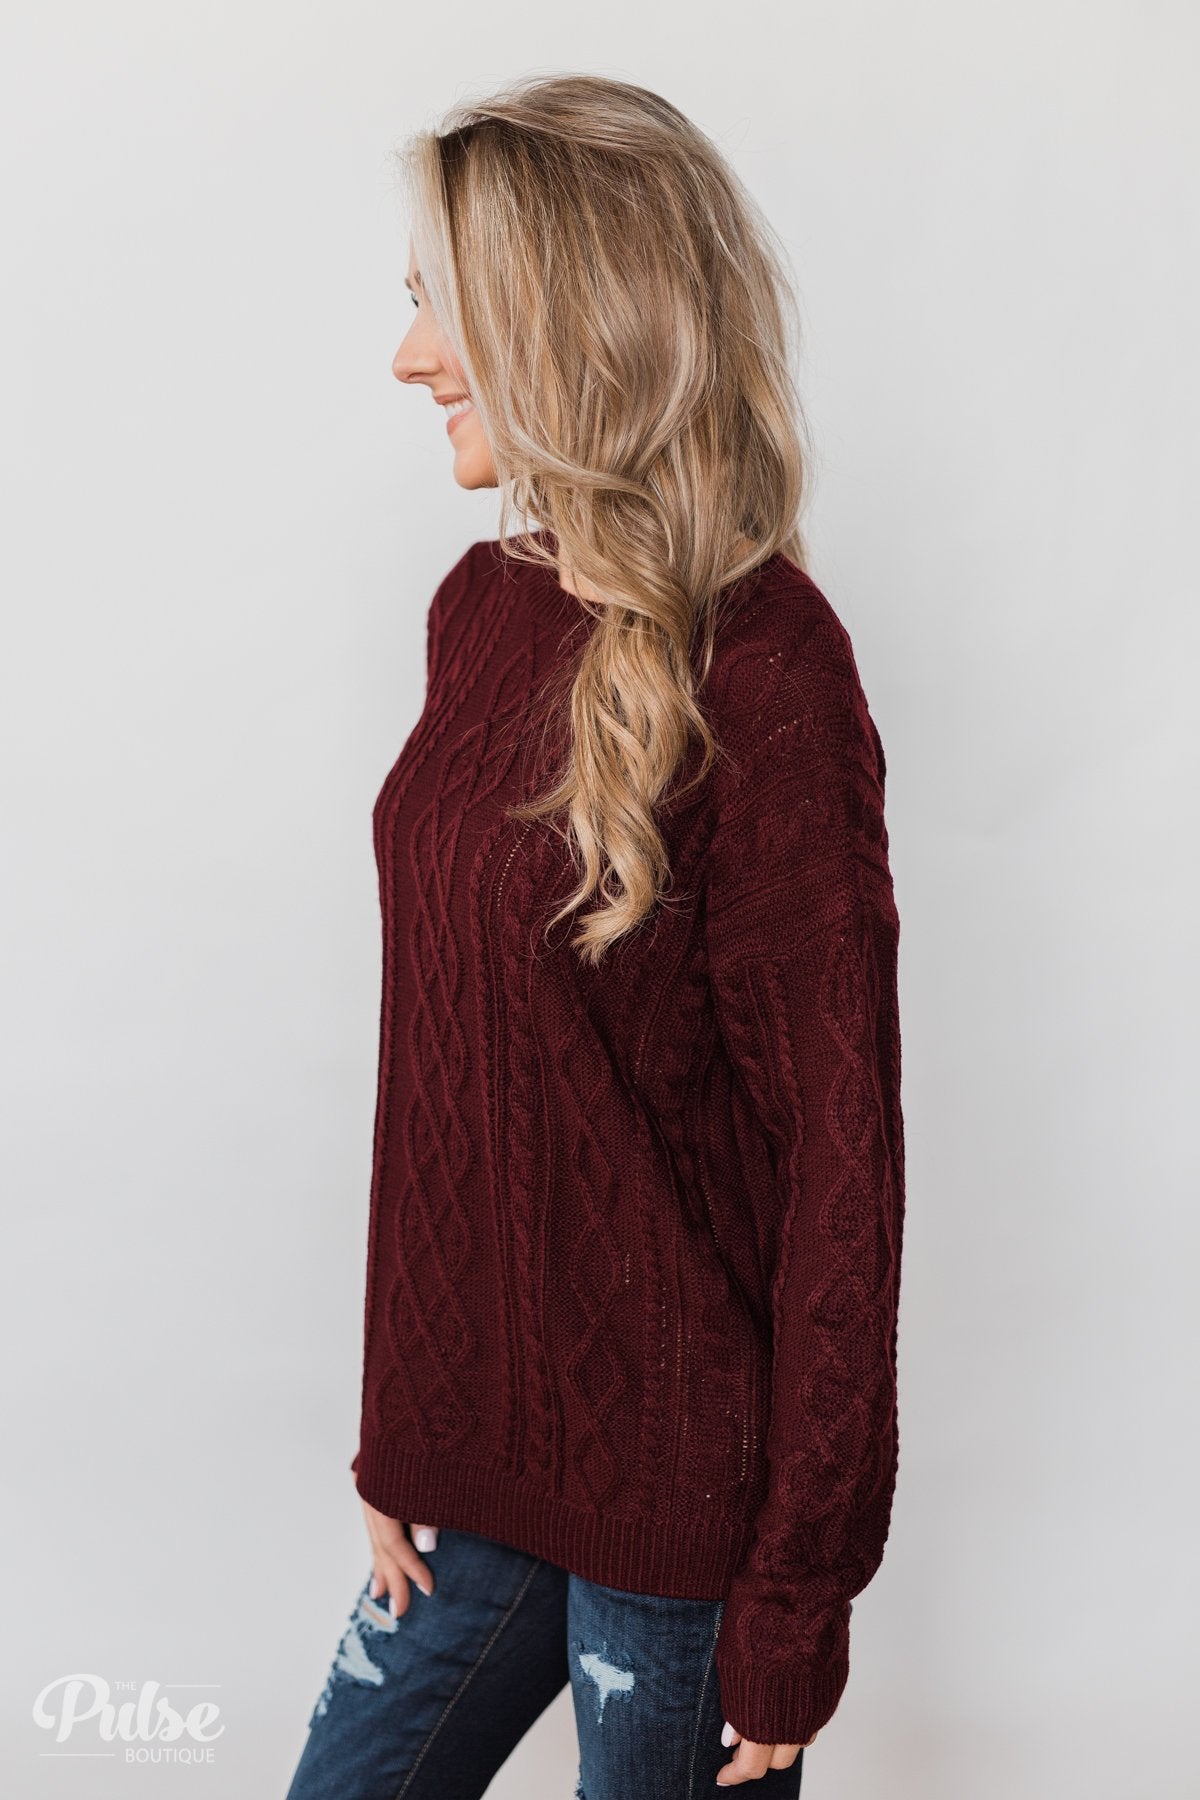 You Belong to Me Knit Sweater- Deep Burgundy